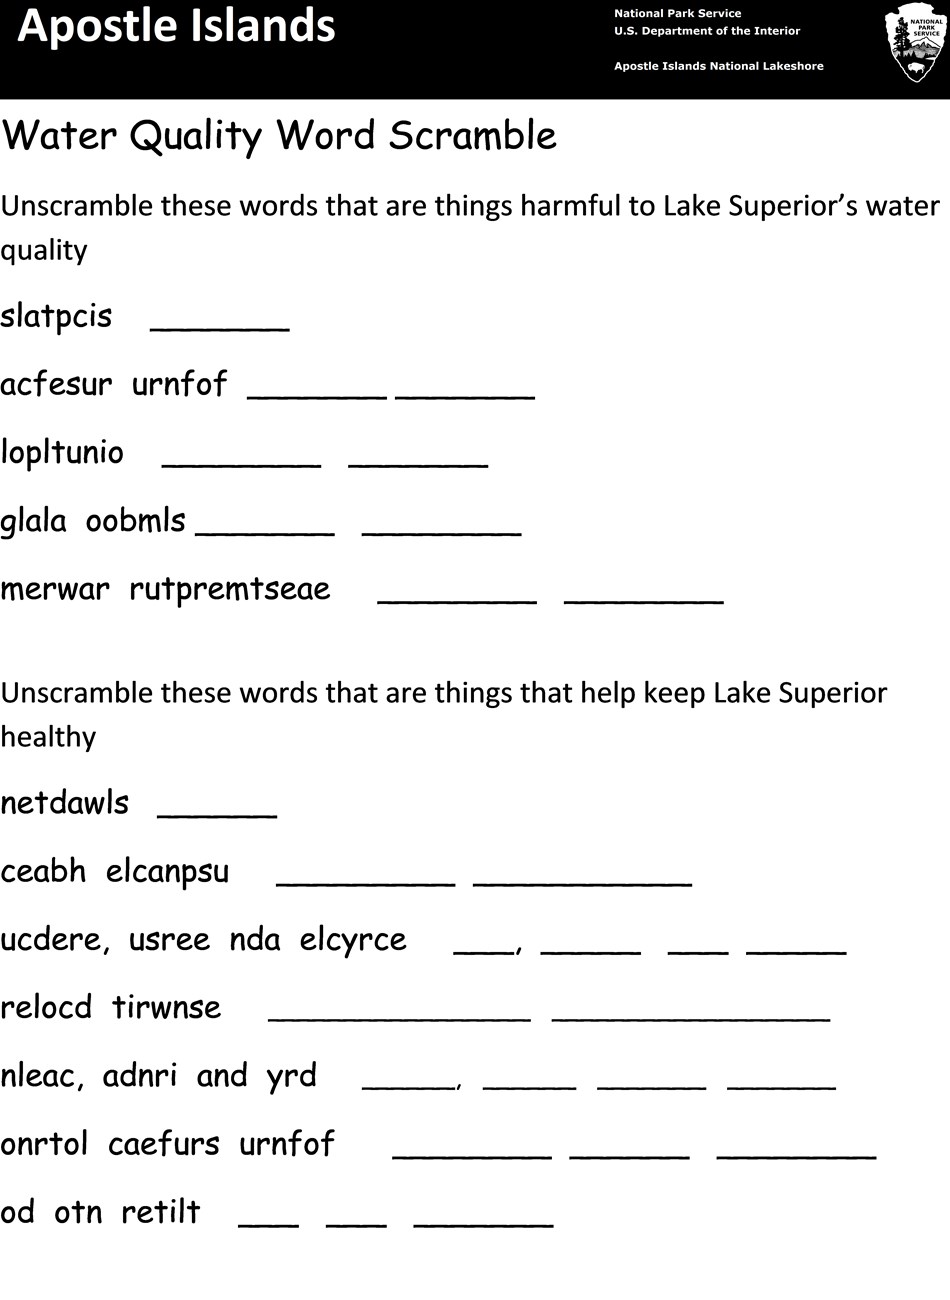 Photo of the word scramble activity sheet.